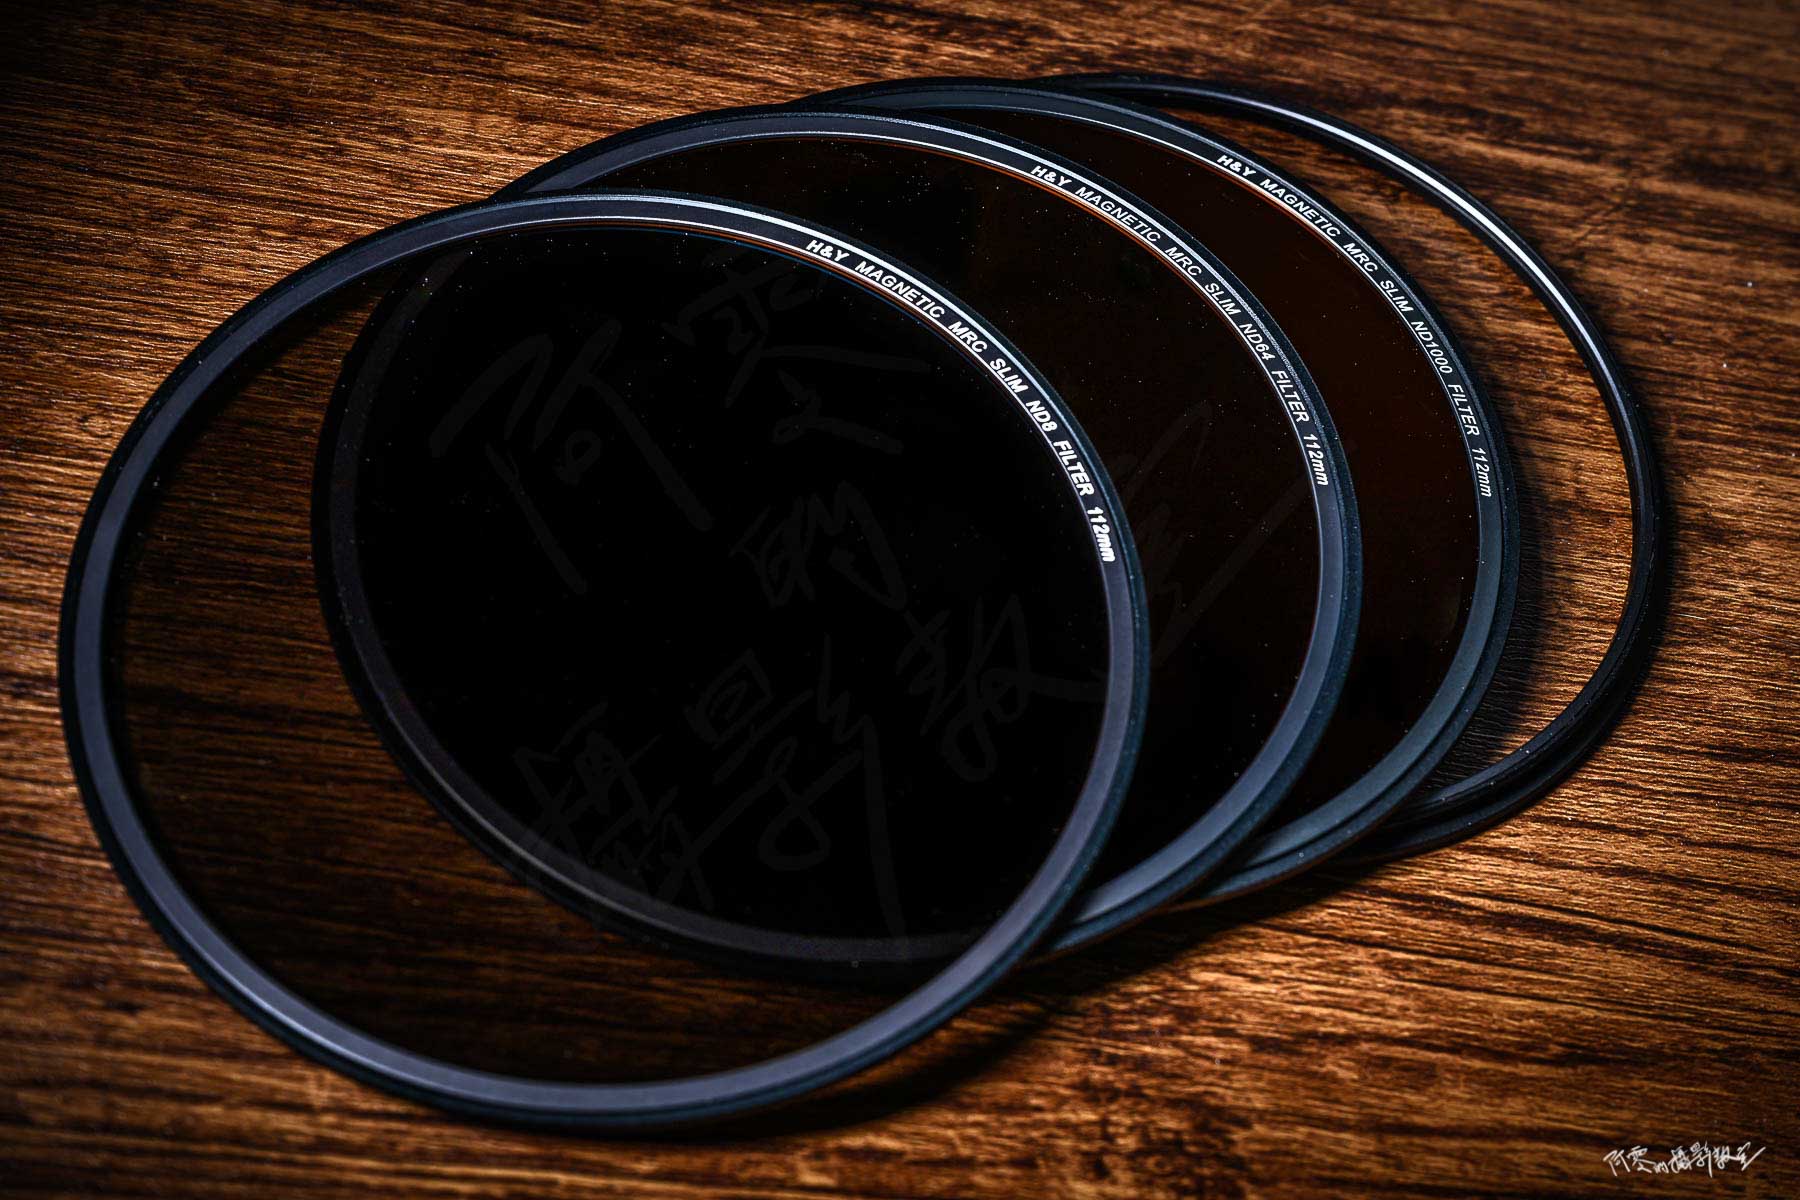 112mm 圓形磁吸濾鏡轉接環<br>Sony 14mm F1.8 專用